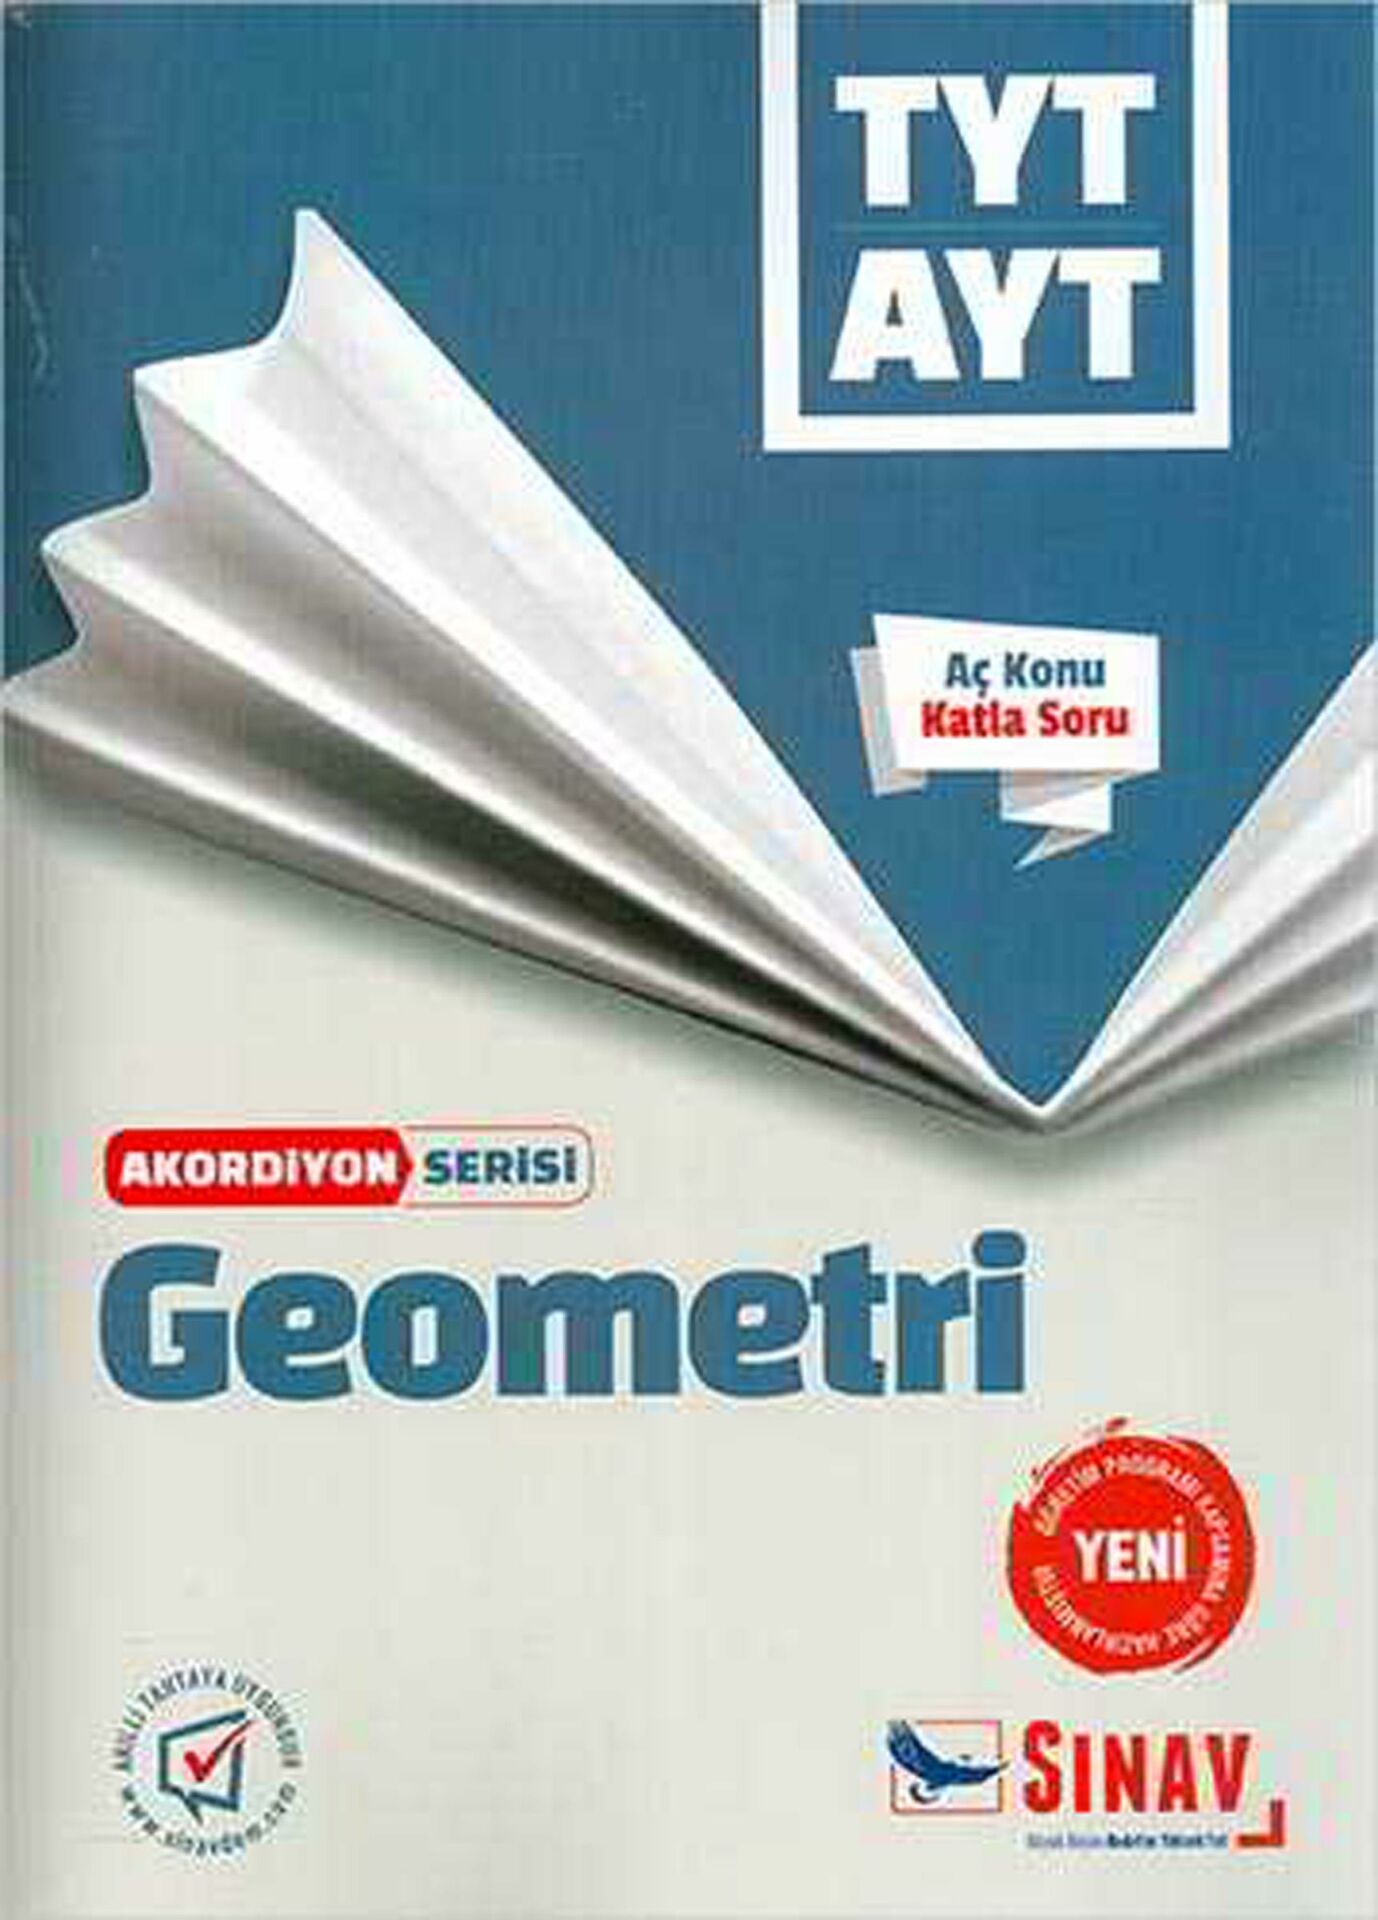 Sınav TYT-AYT Geometri Akordiyon Kitap